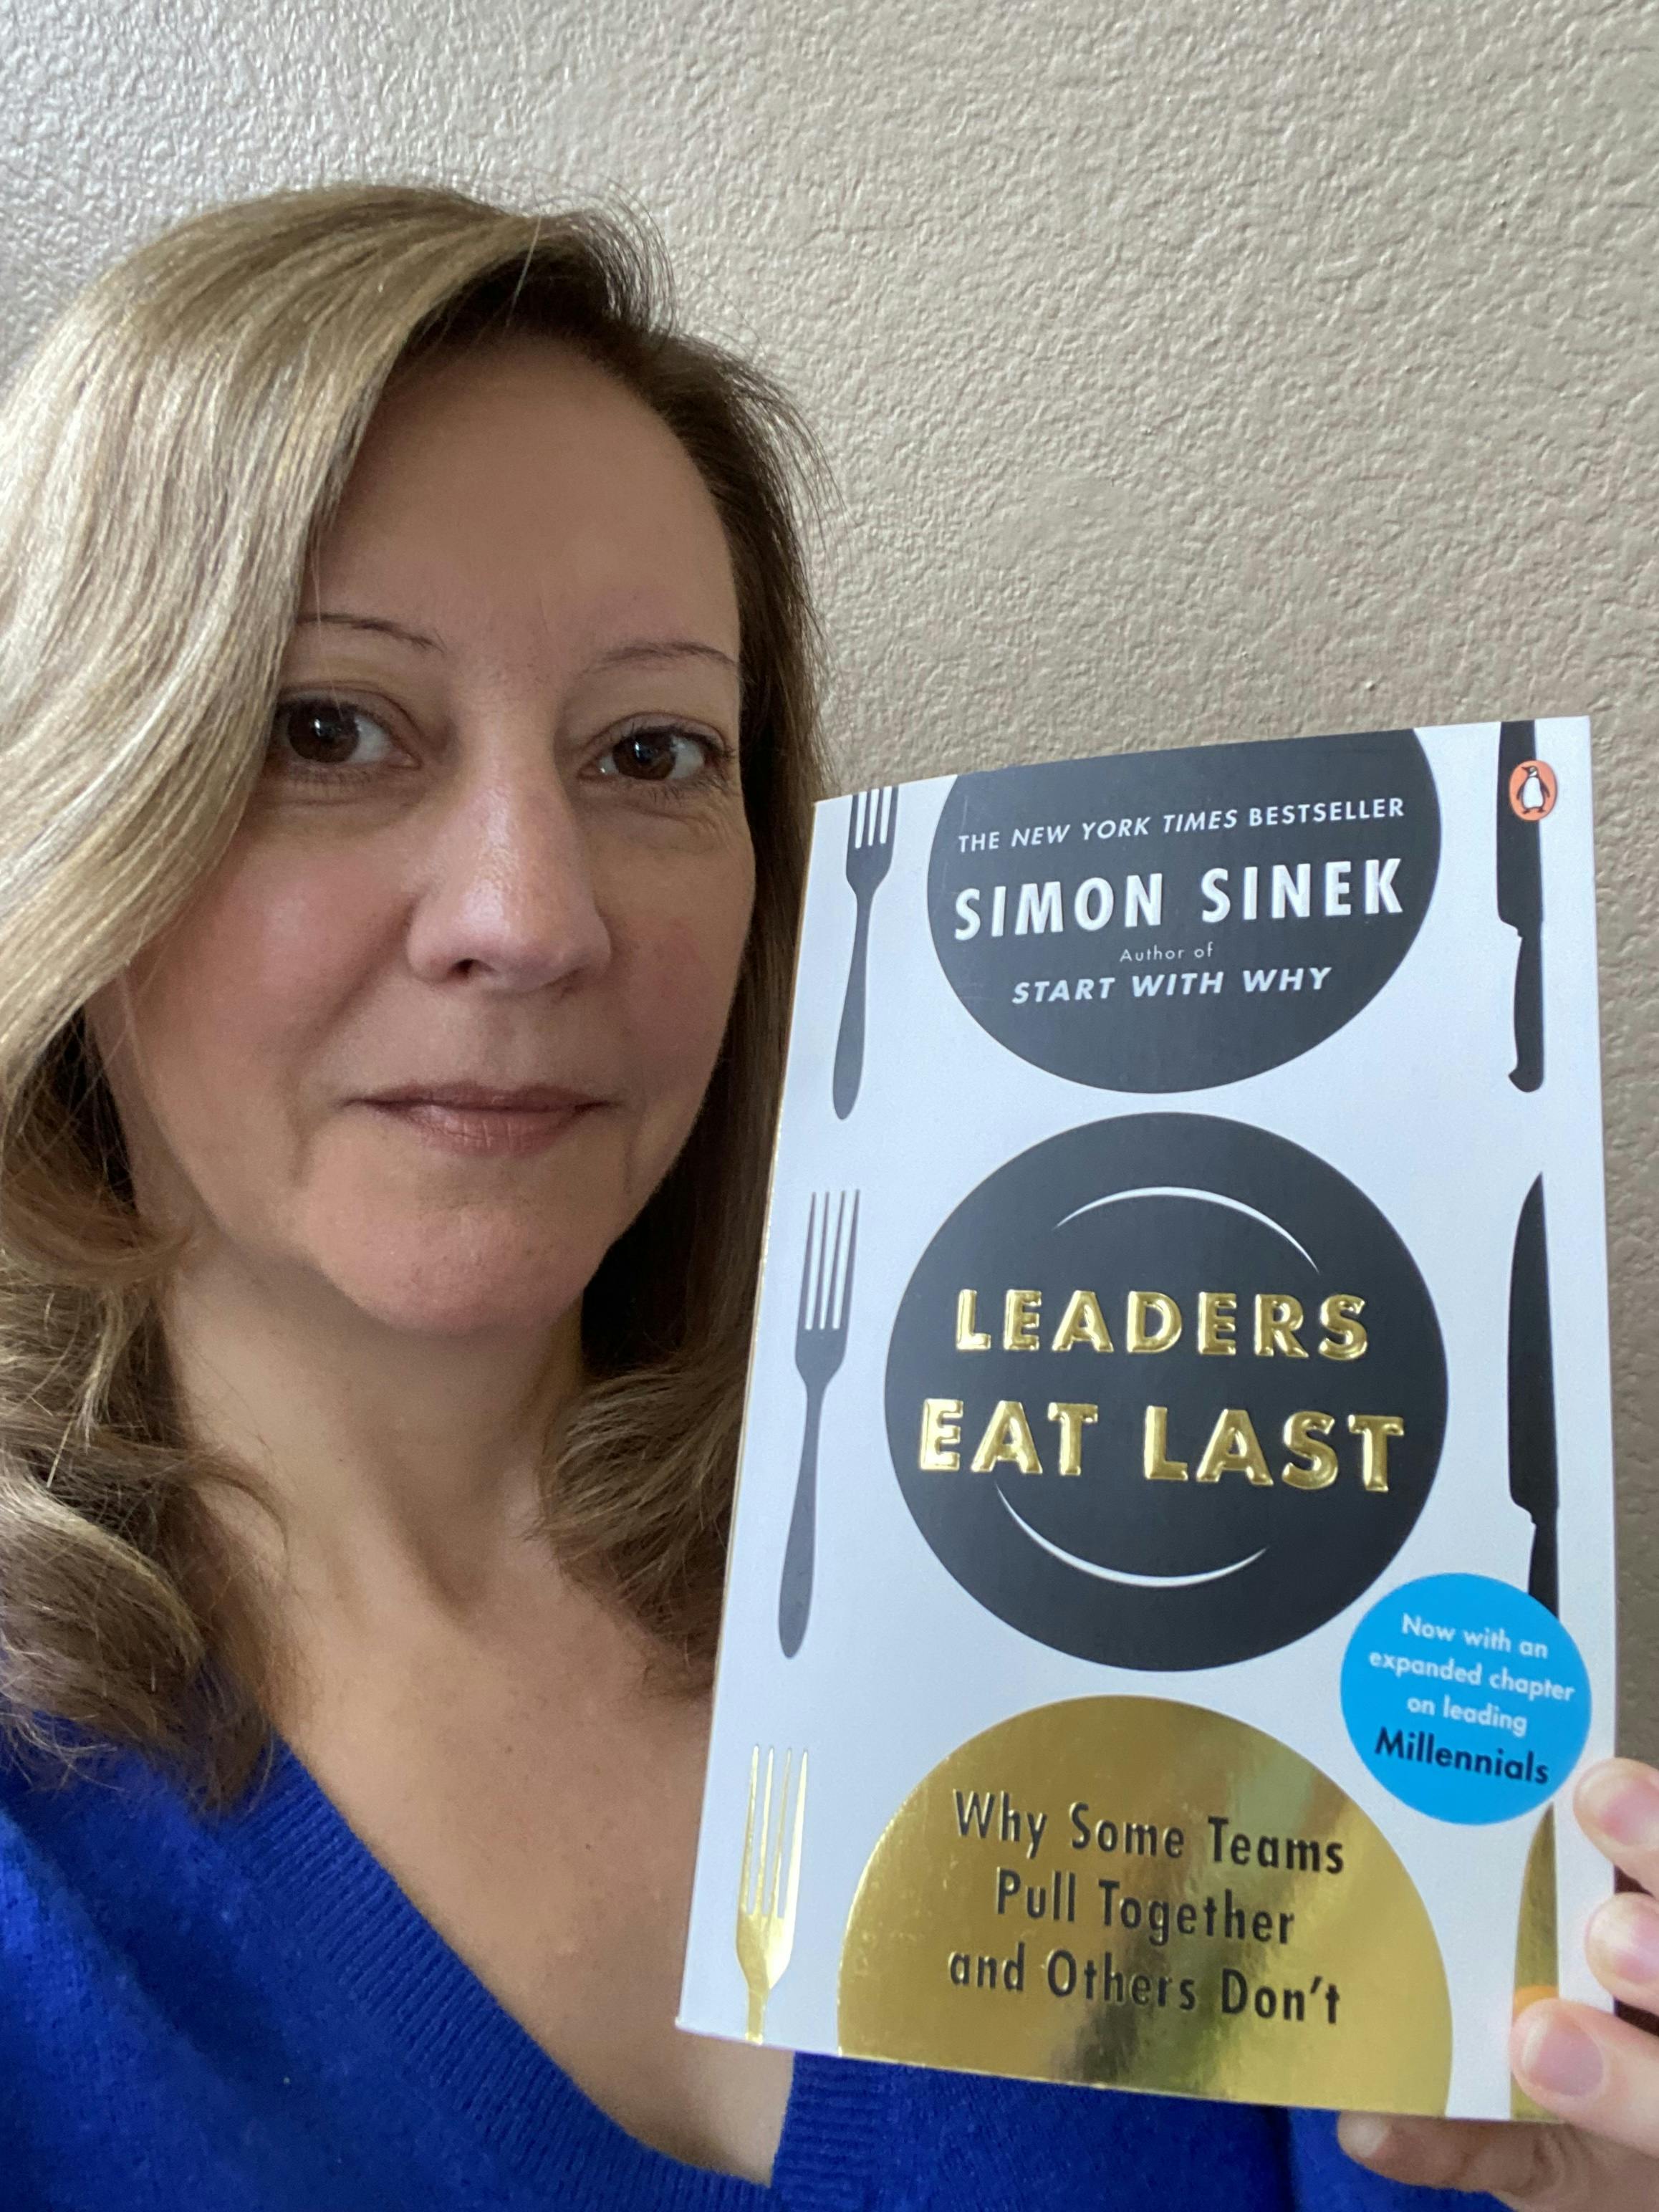 A photo of Stephanie holding the book "Leaders Eat Last" by Simon Sinek 